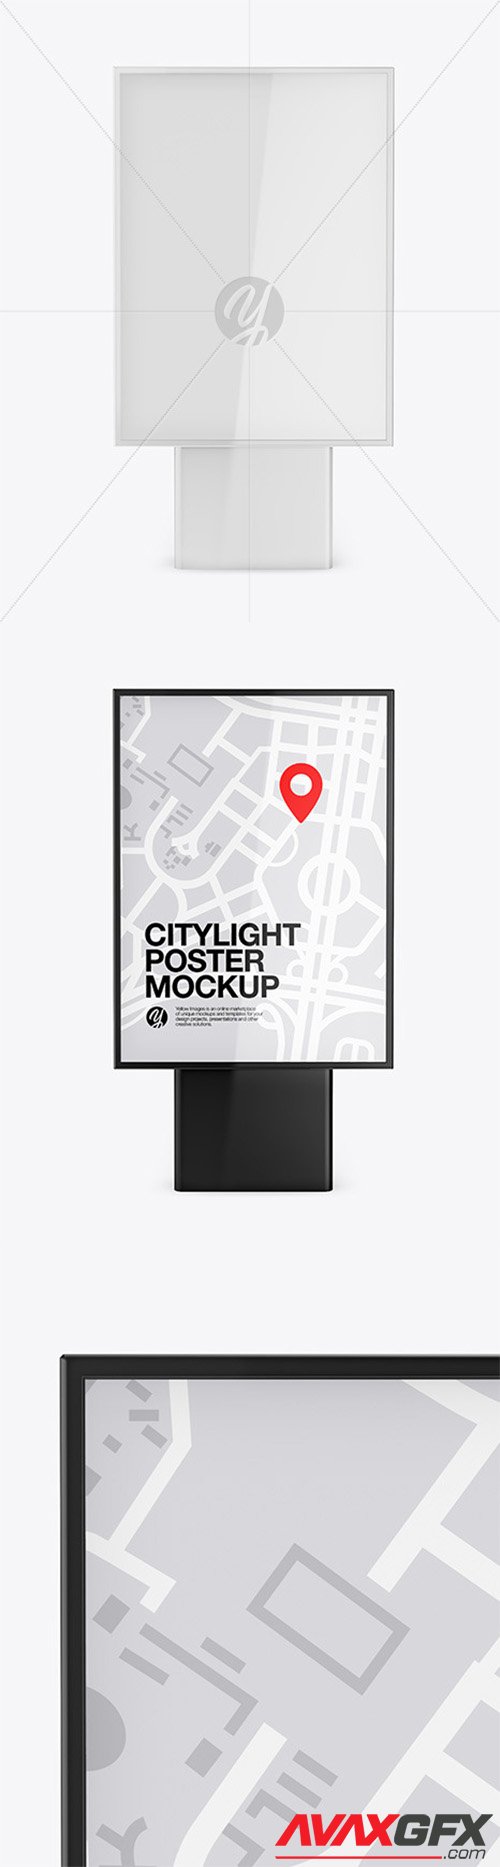 Citylight Poster Mockup 58263